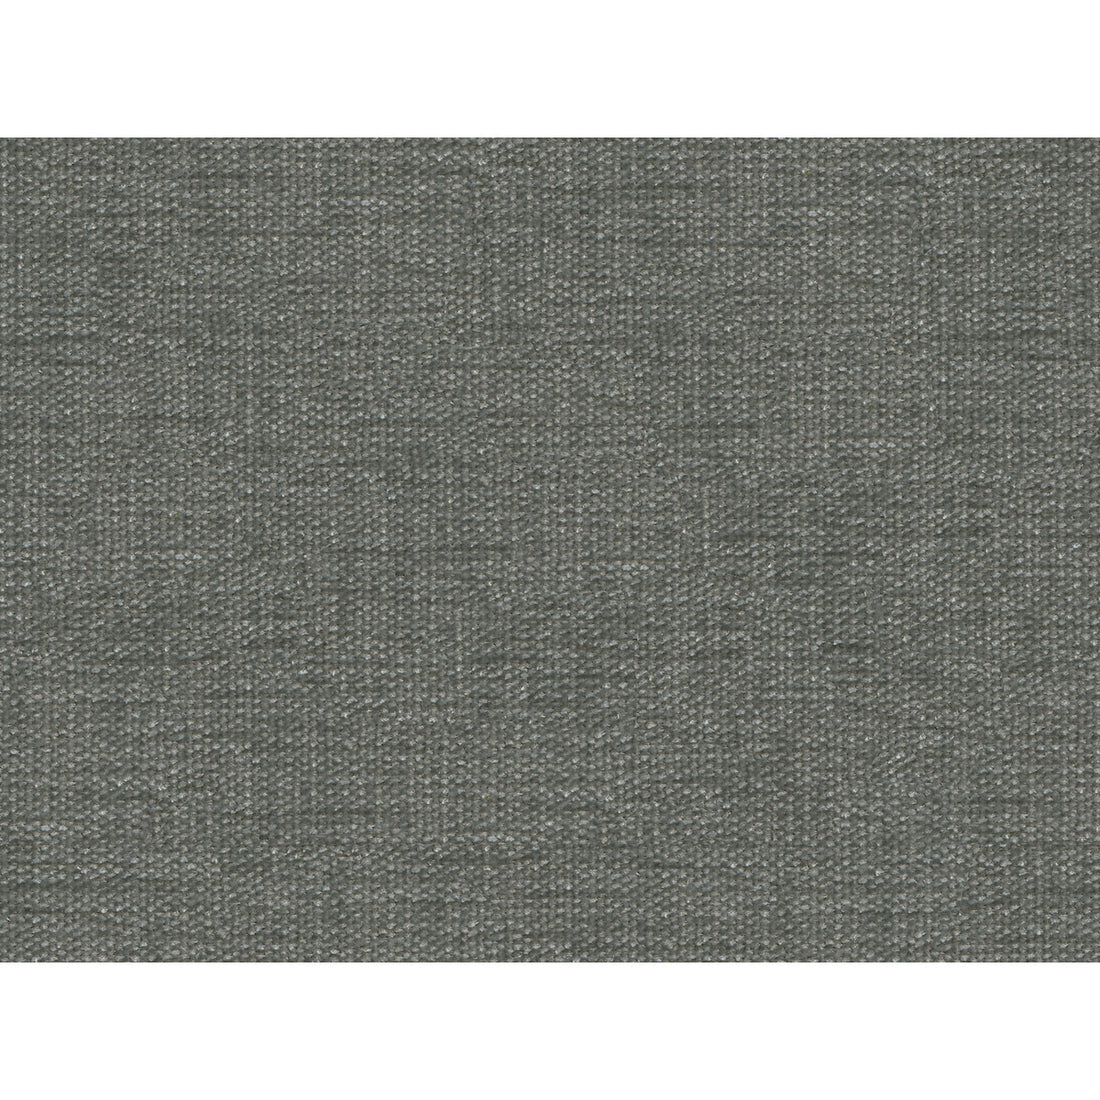 Kravet Smart fabric in 34959-11 color - pattern 34959.11.0 - by Kravet Smart in the Performance Kravetarmor collection